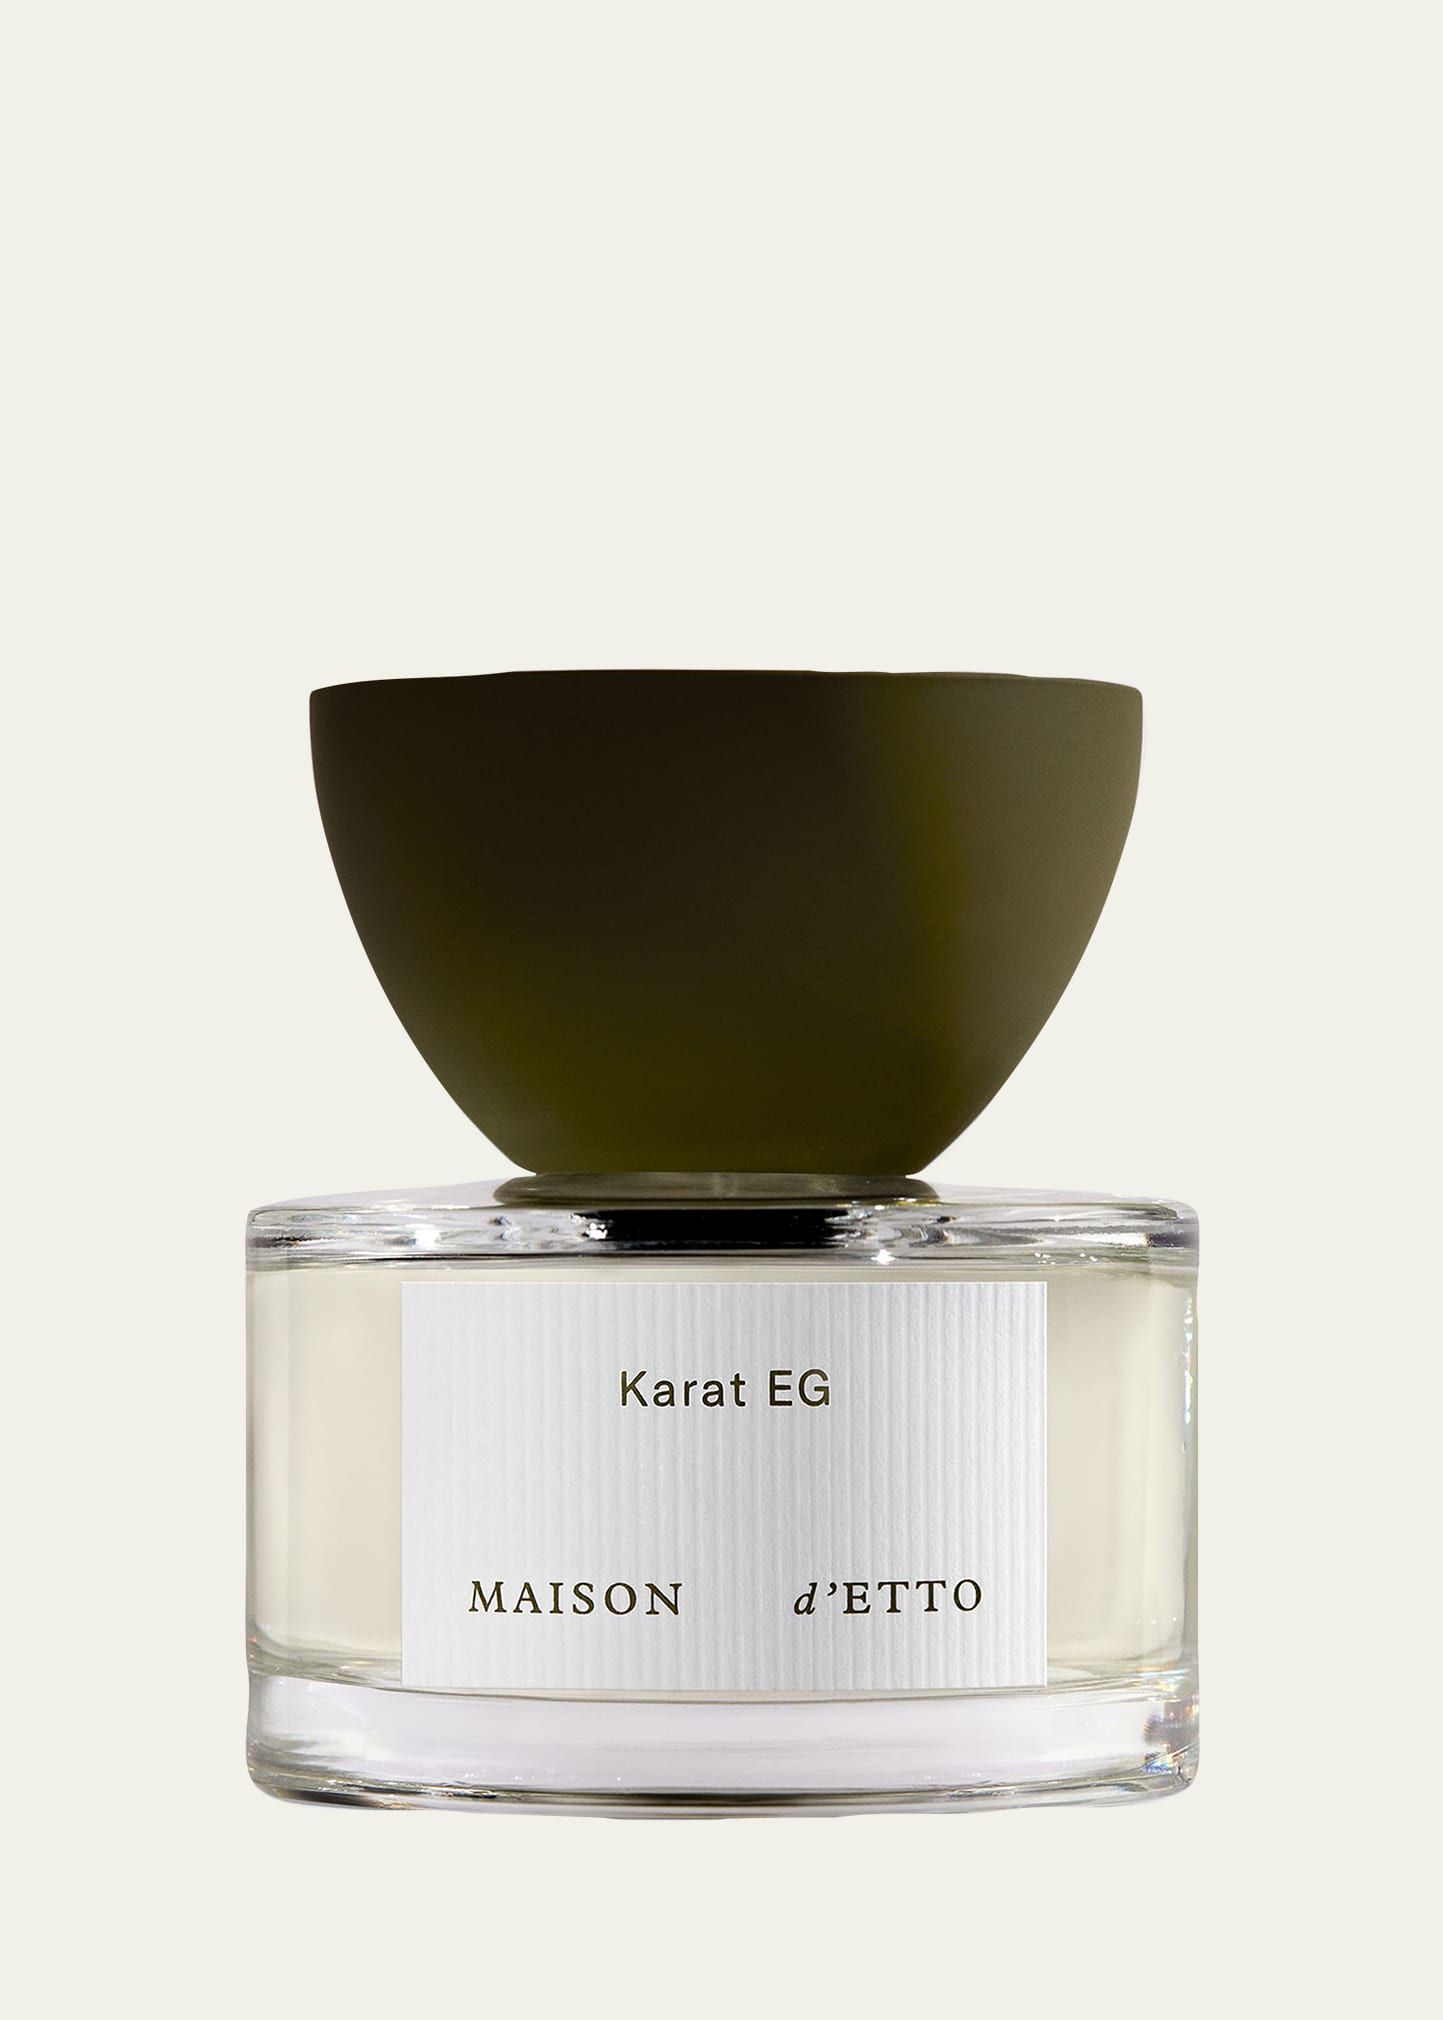 Karat EG Eau de Parfum, 2 oz./ 60 mL